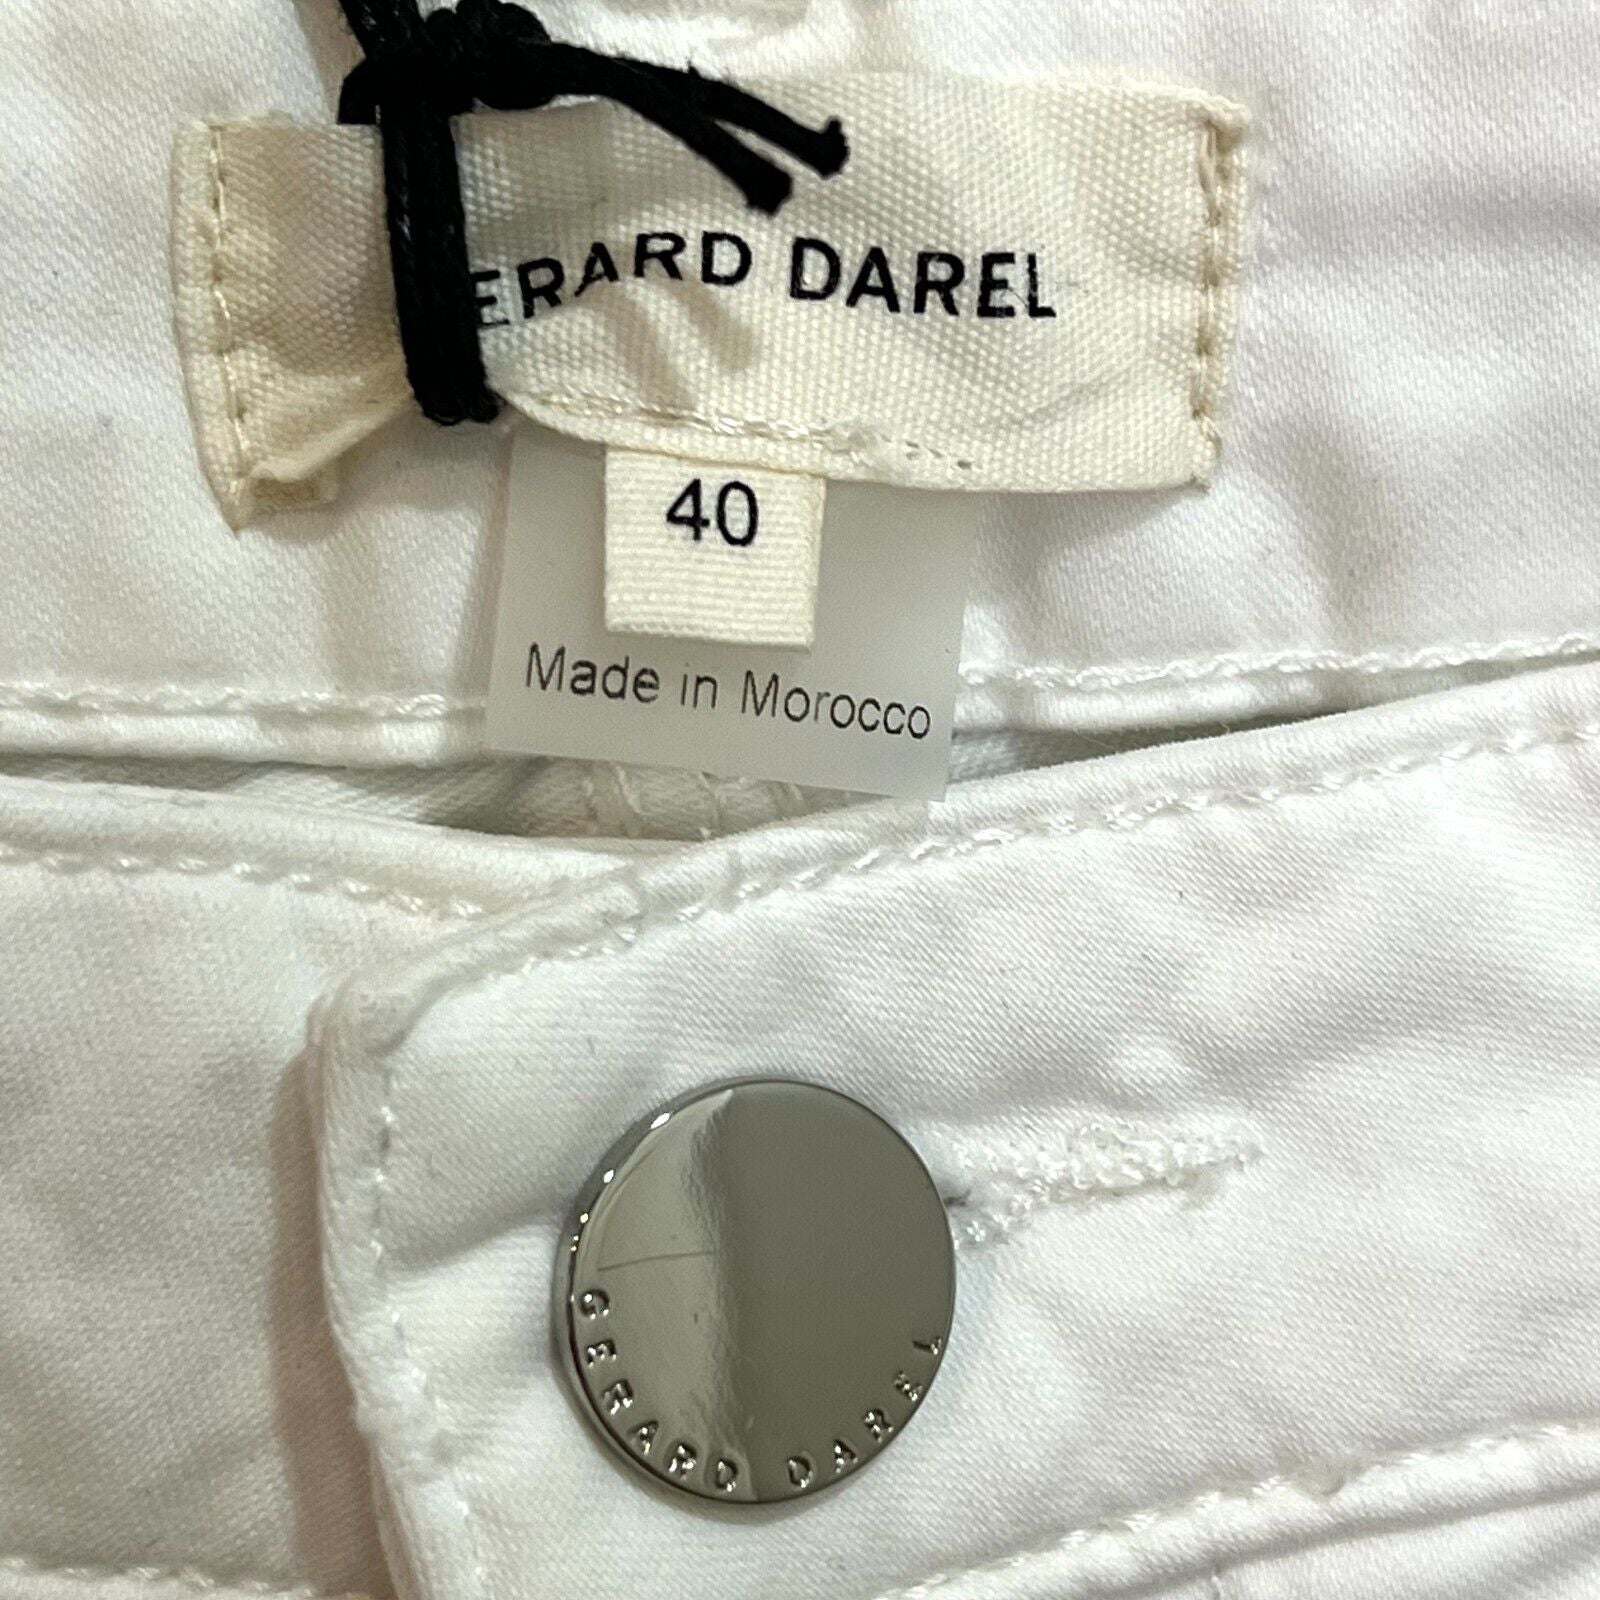 Gerard Darel Maya Cigarette Pants in White US Size 8 (FR 40) NEW $235